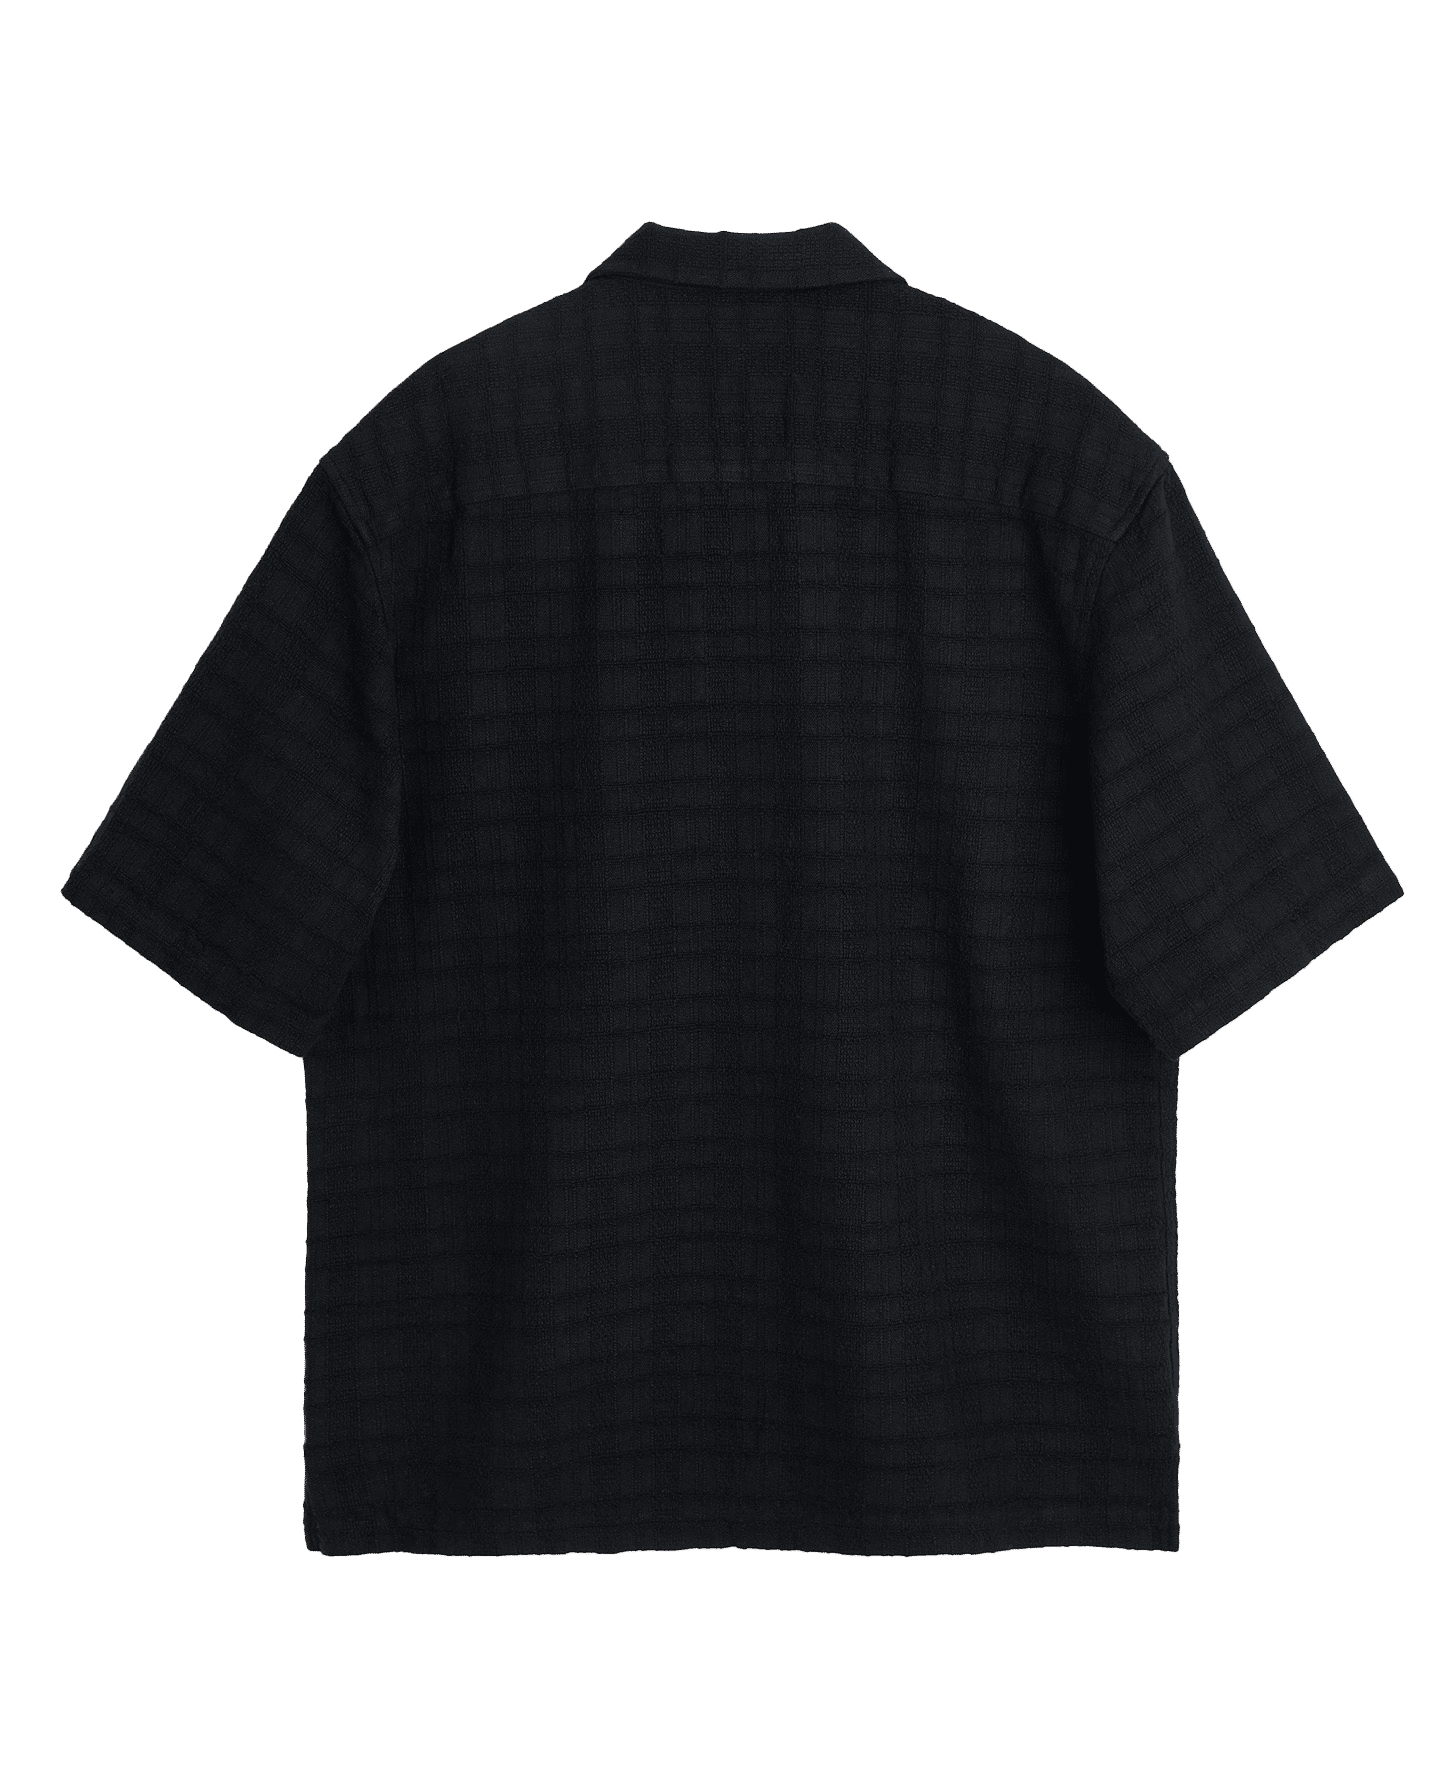 SUNFLOWER 1187 Spacey SS Shirt - Black Back